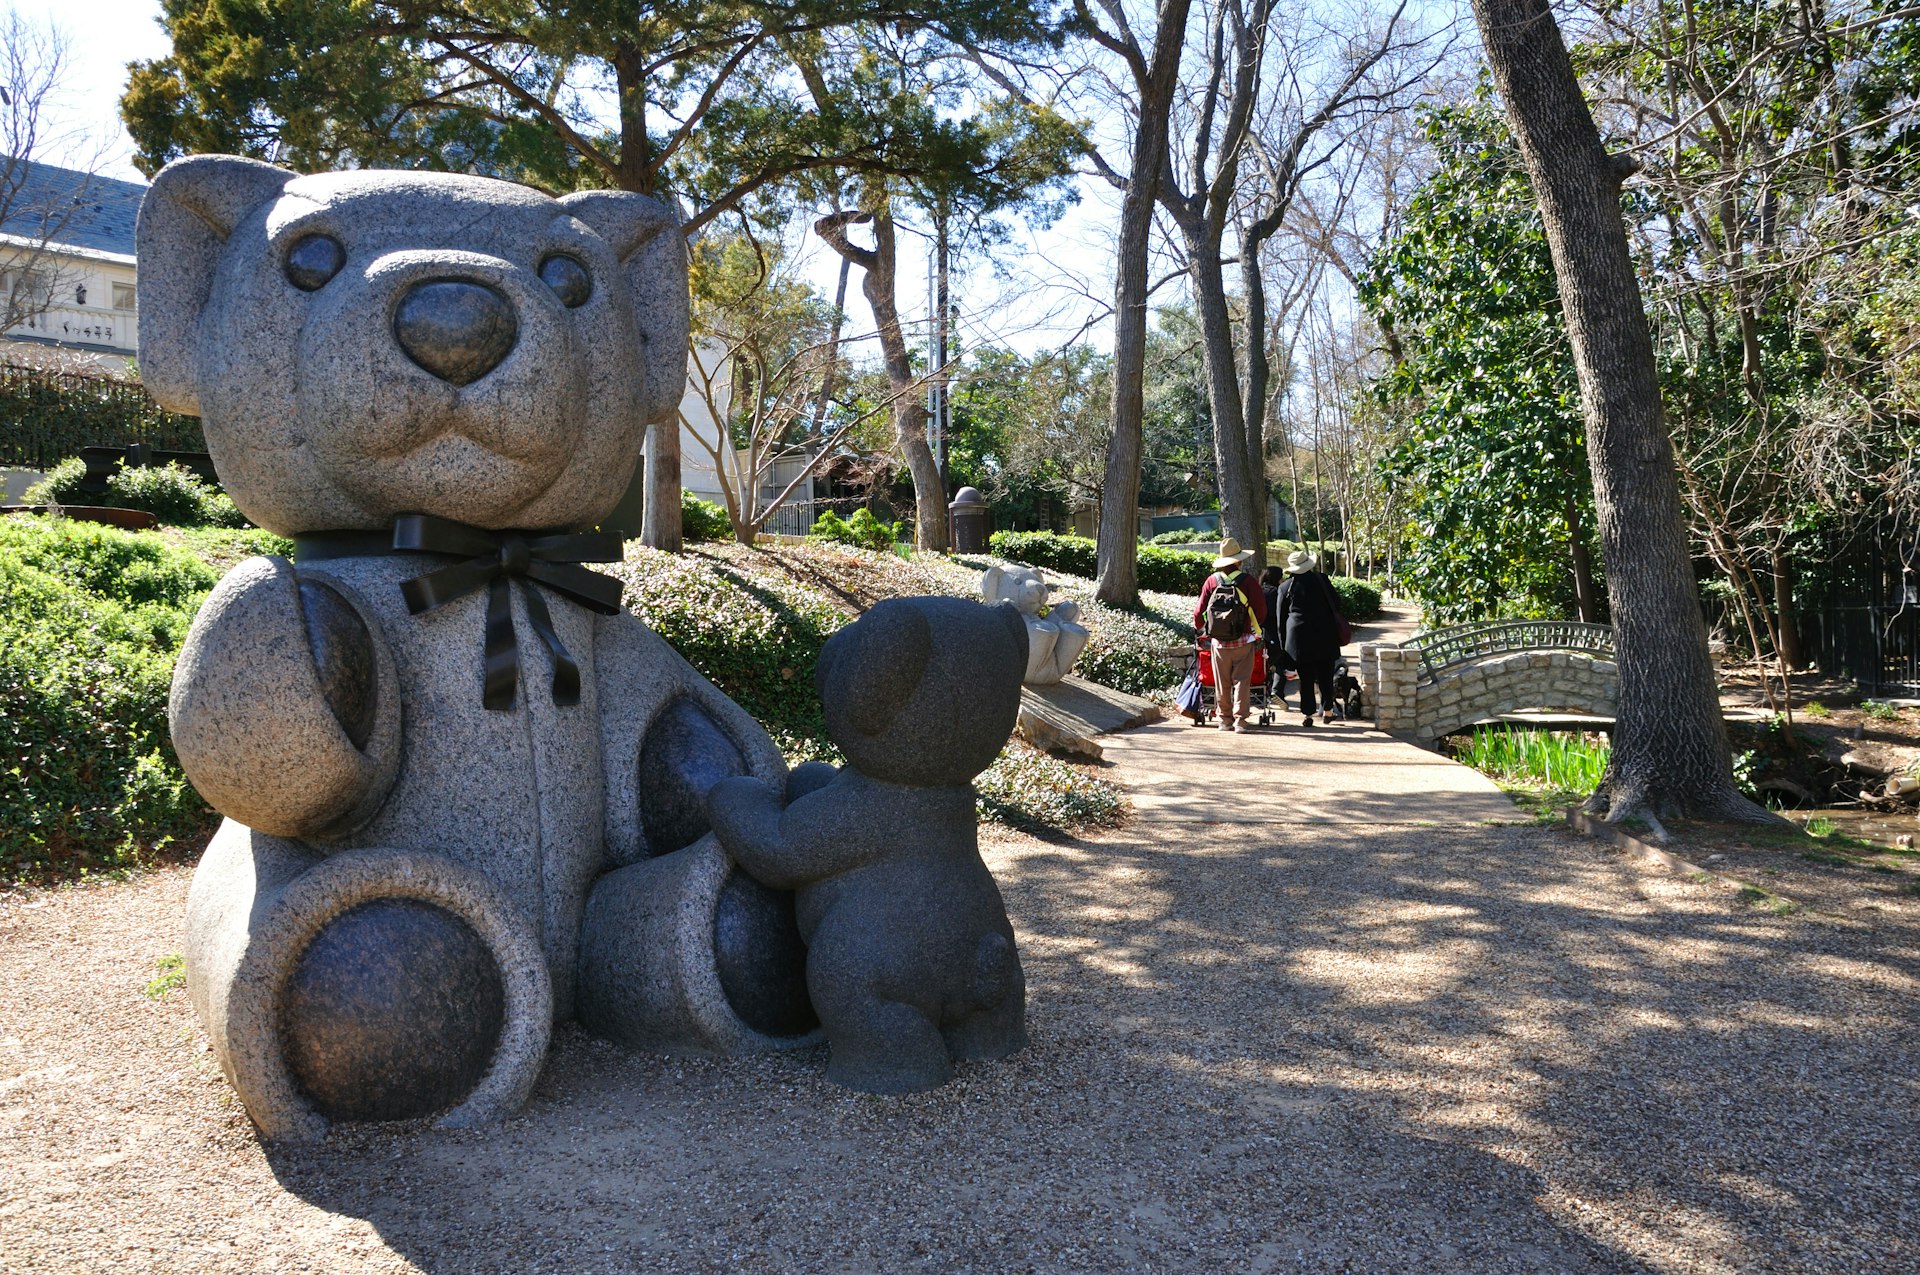 Sculpture of a Teddy bear (author J.T. Williams) in Highland Park, Dallas, Texas, USA